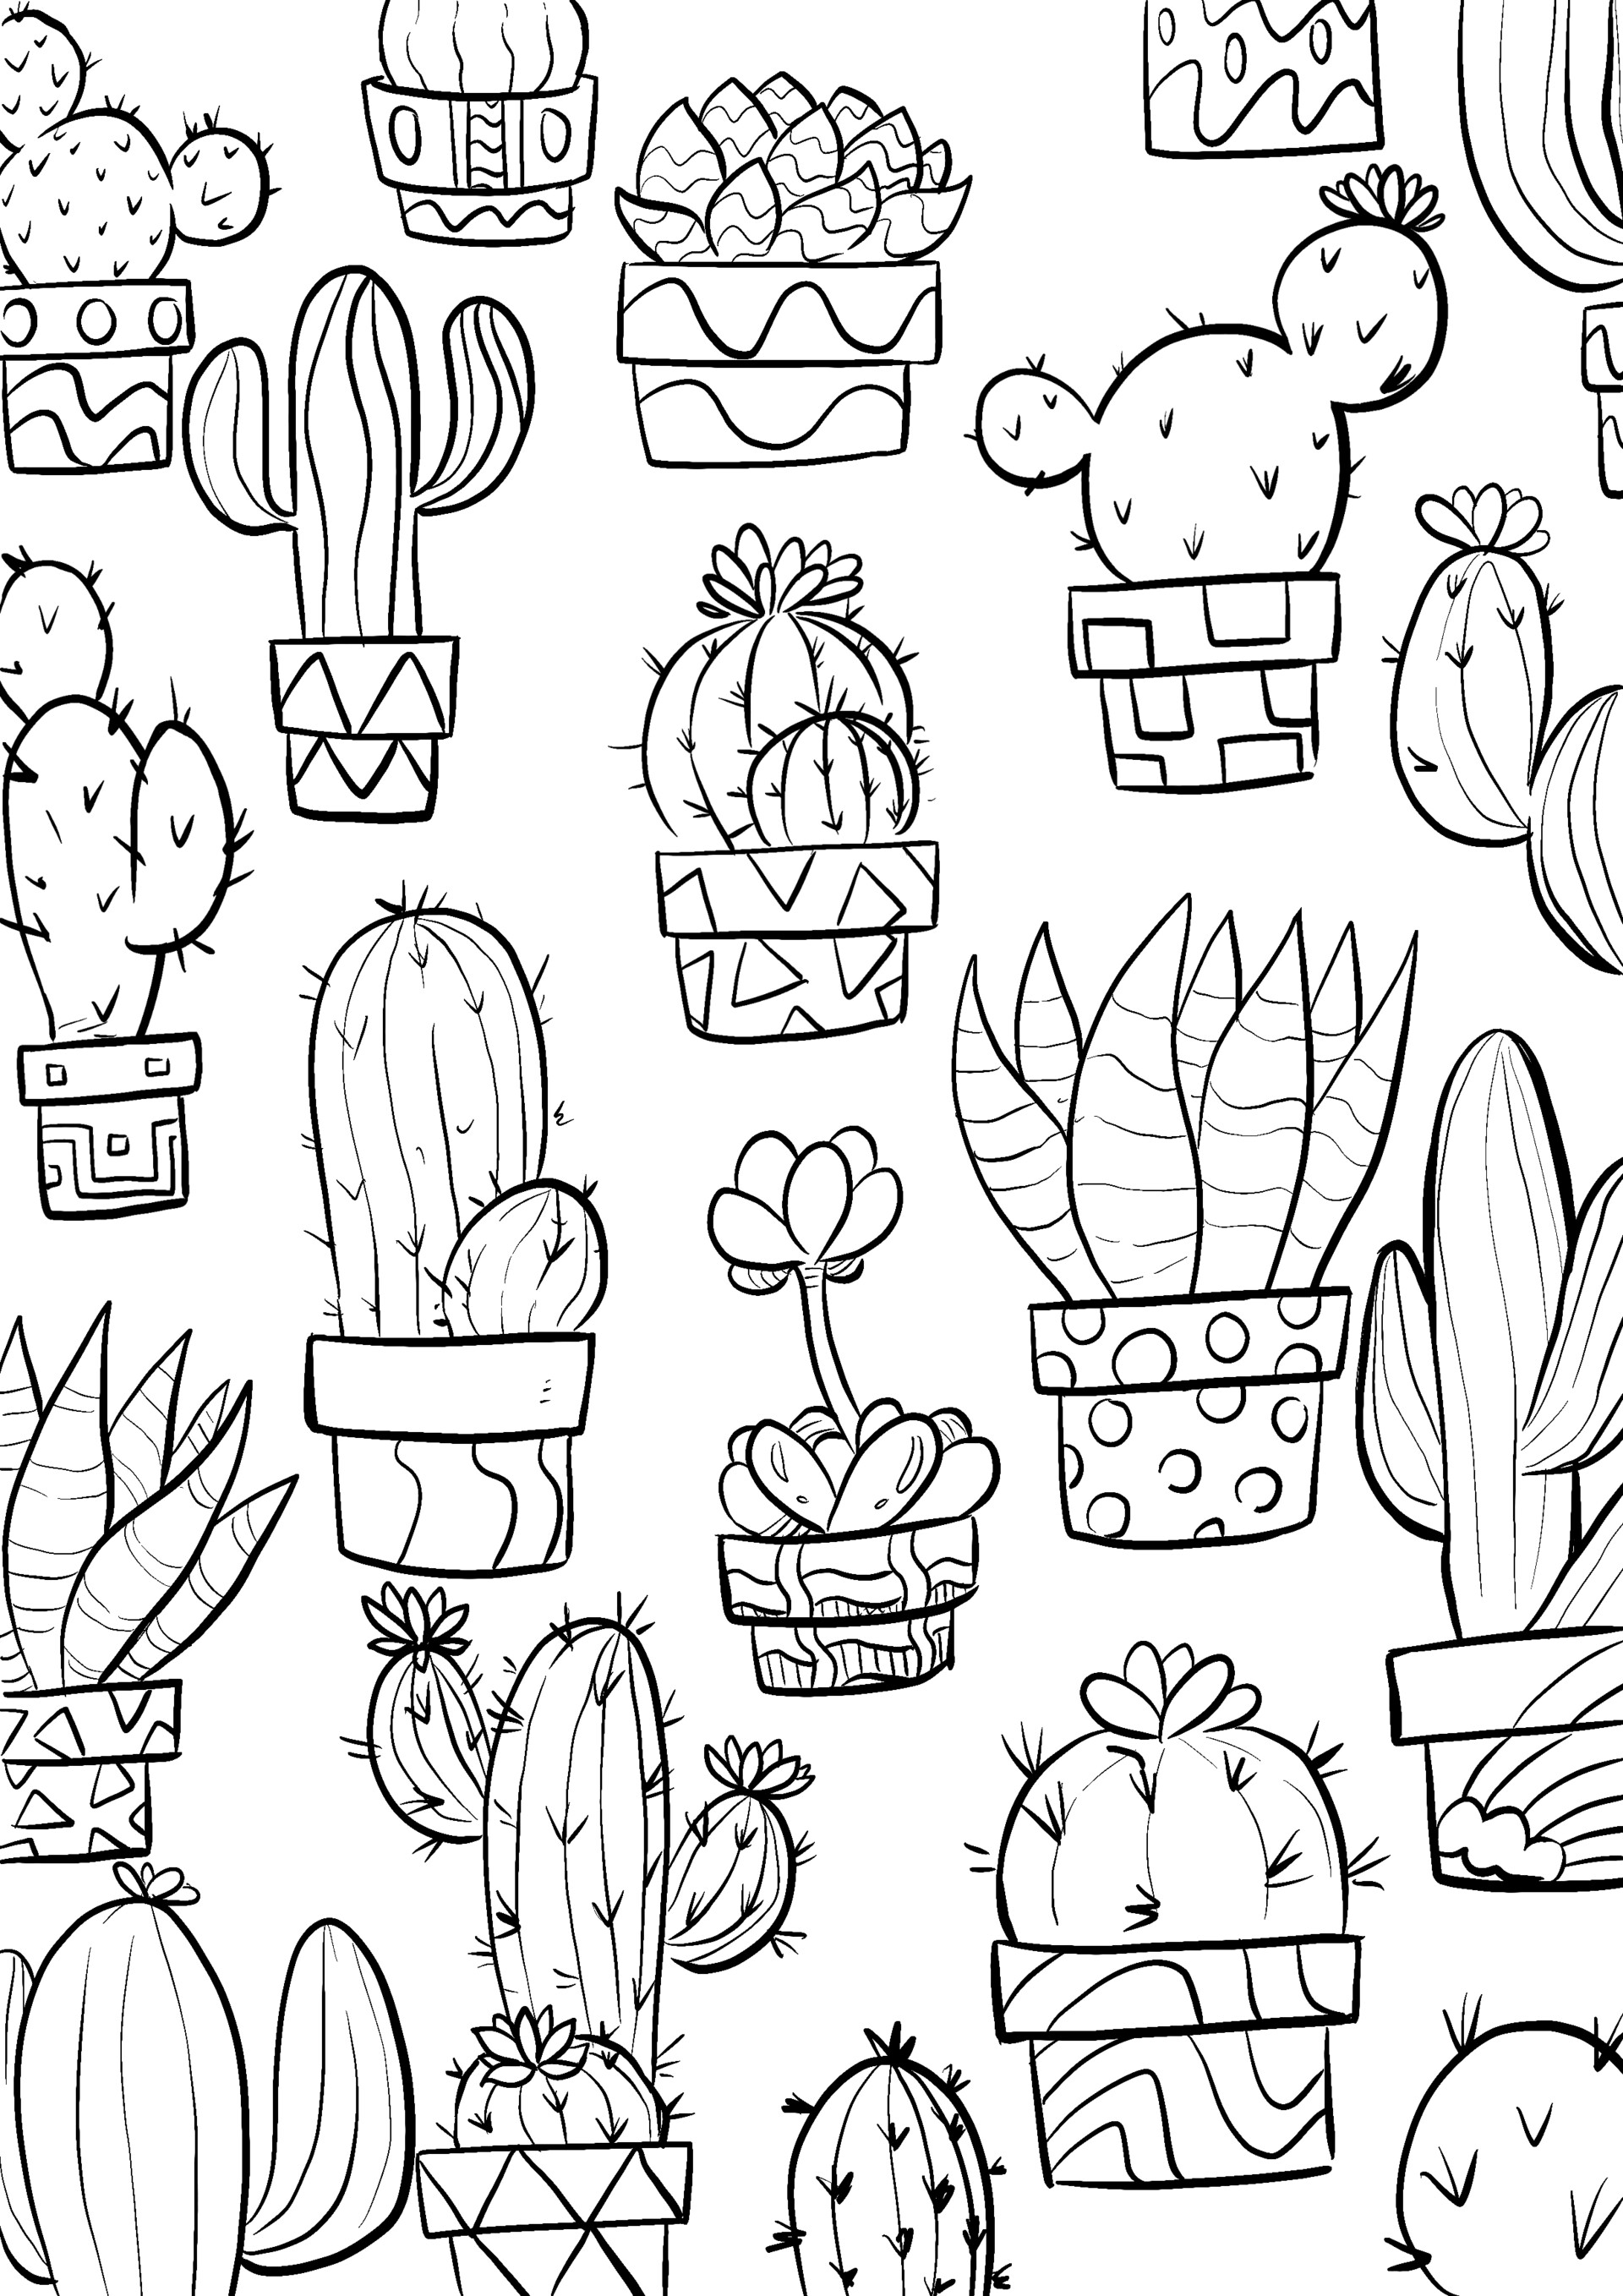 ArtStation - Colouring sheet.cactus